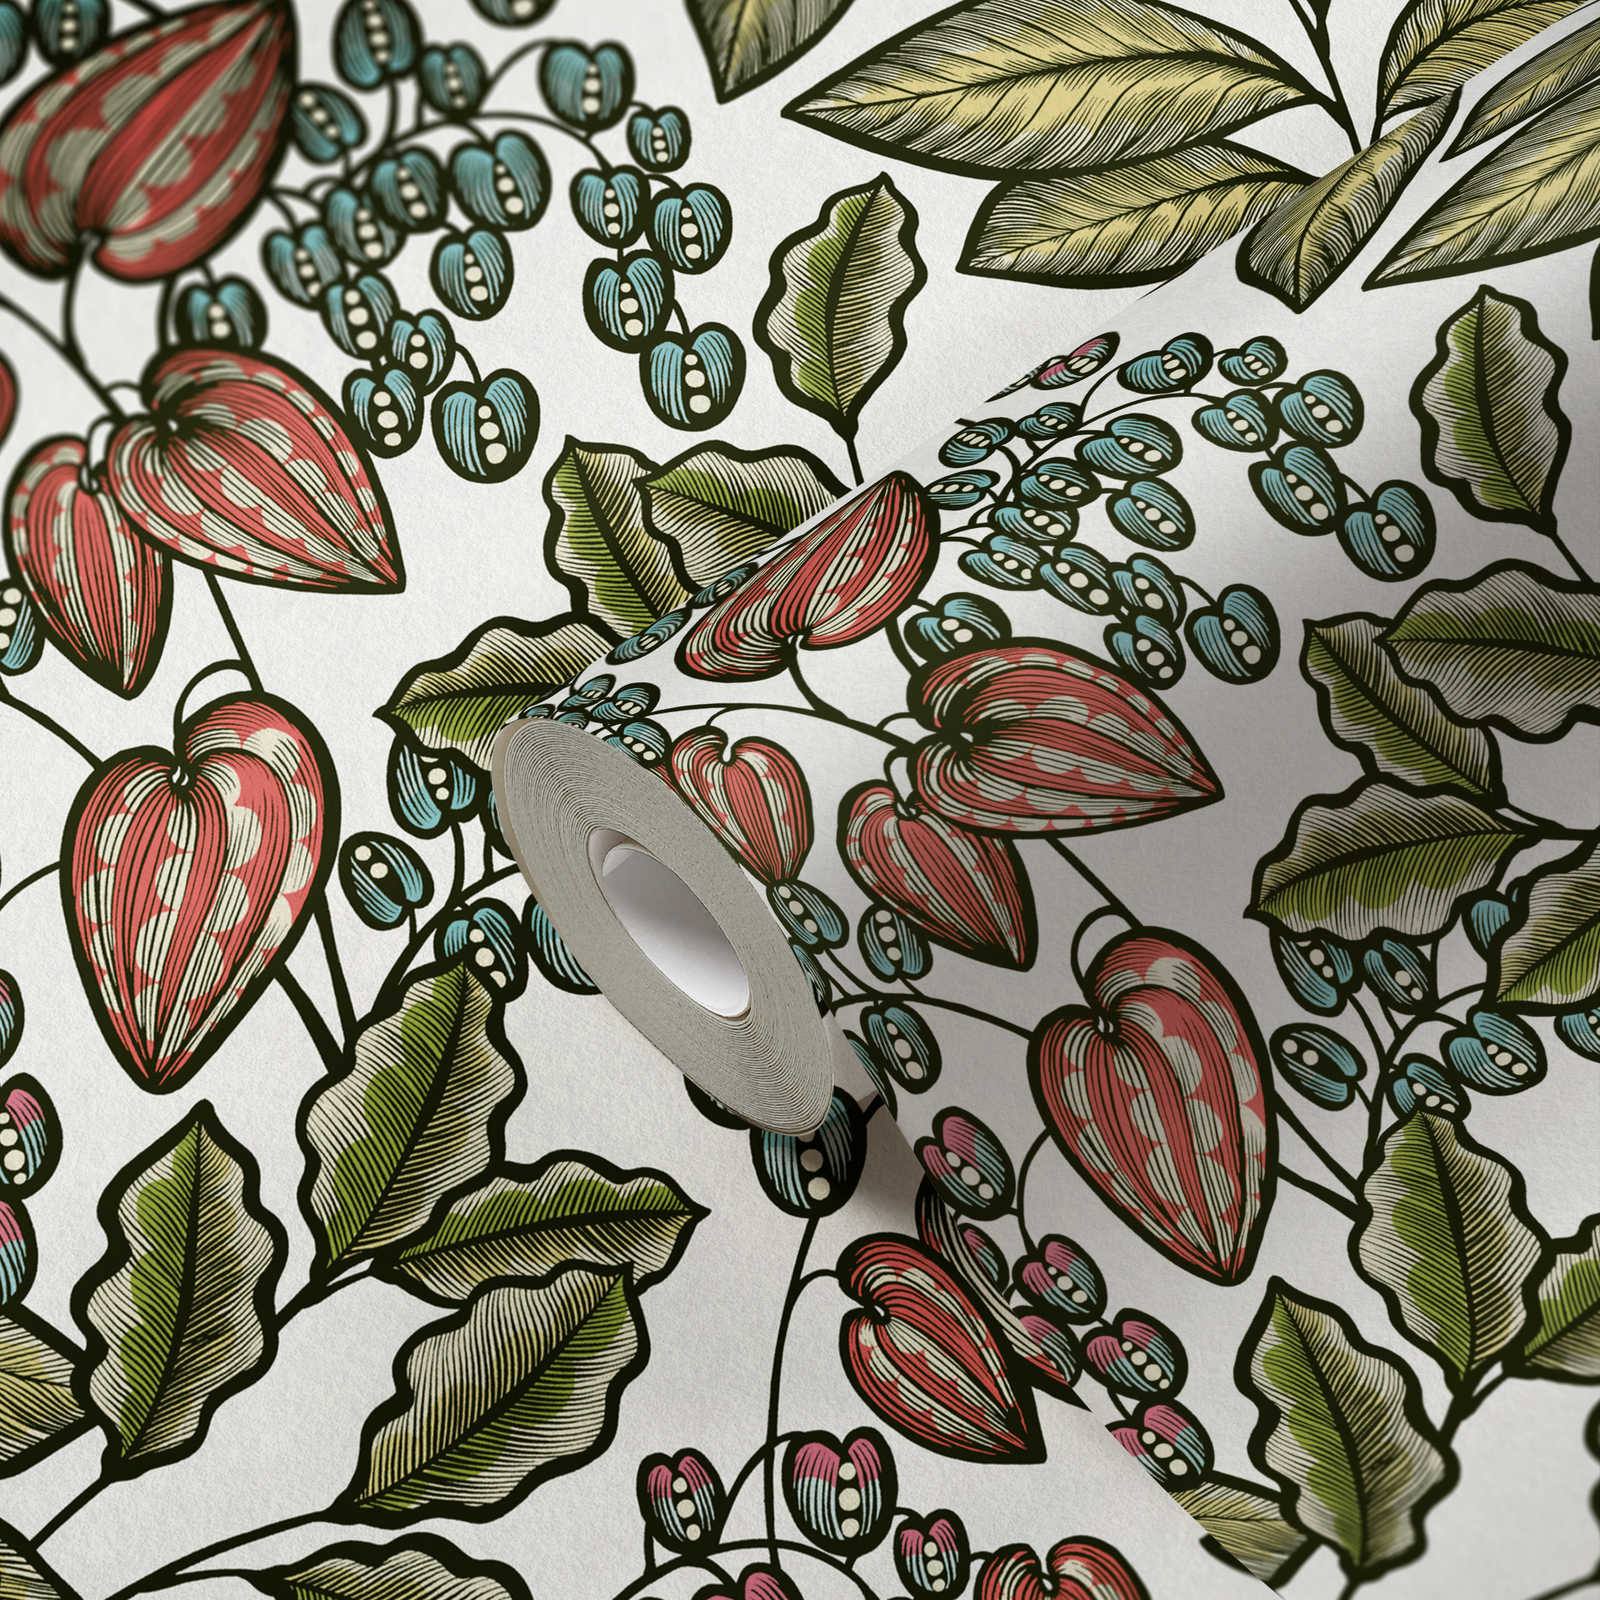             Floral wallpaper nature design Scandinavian print - colourful, green, white
        